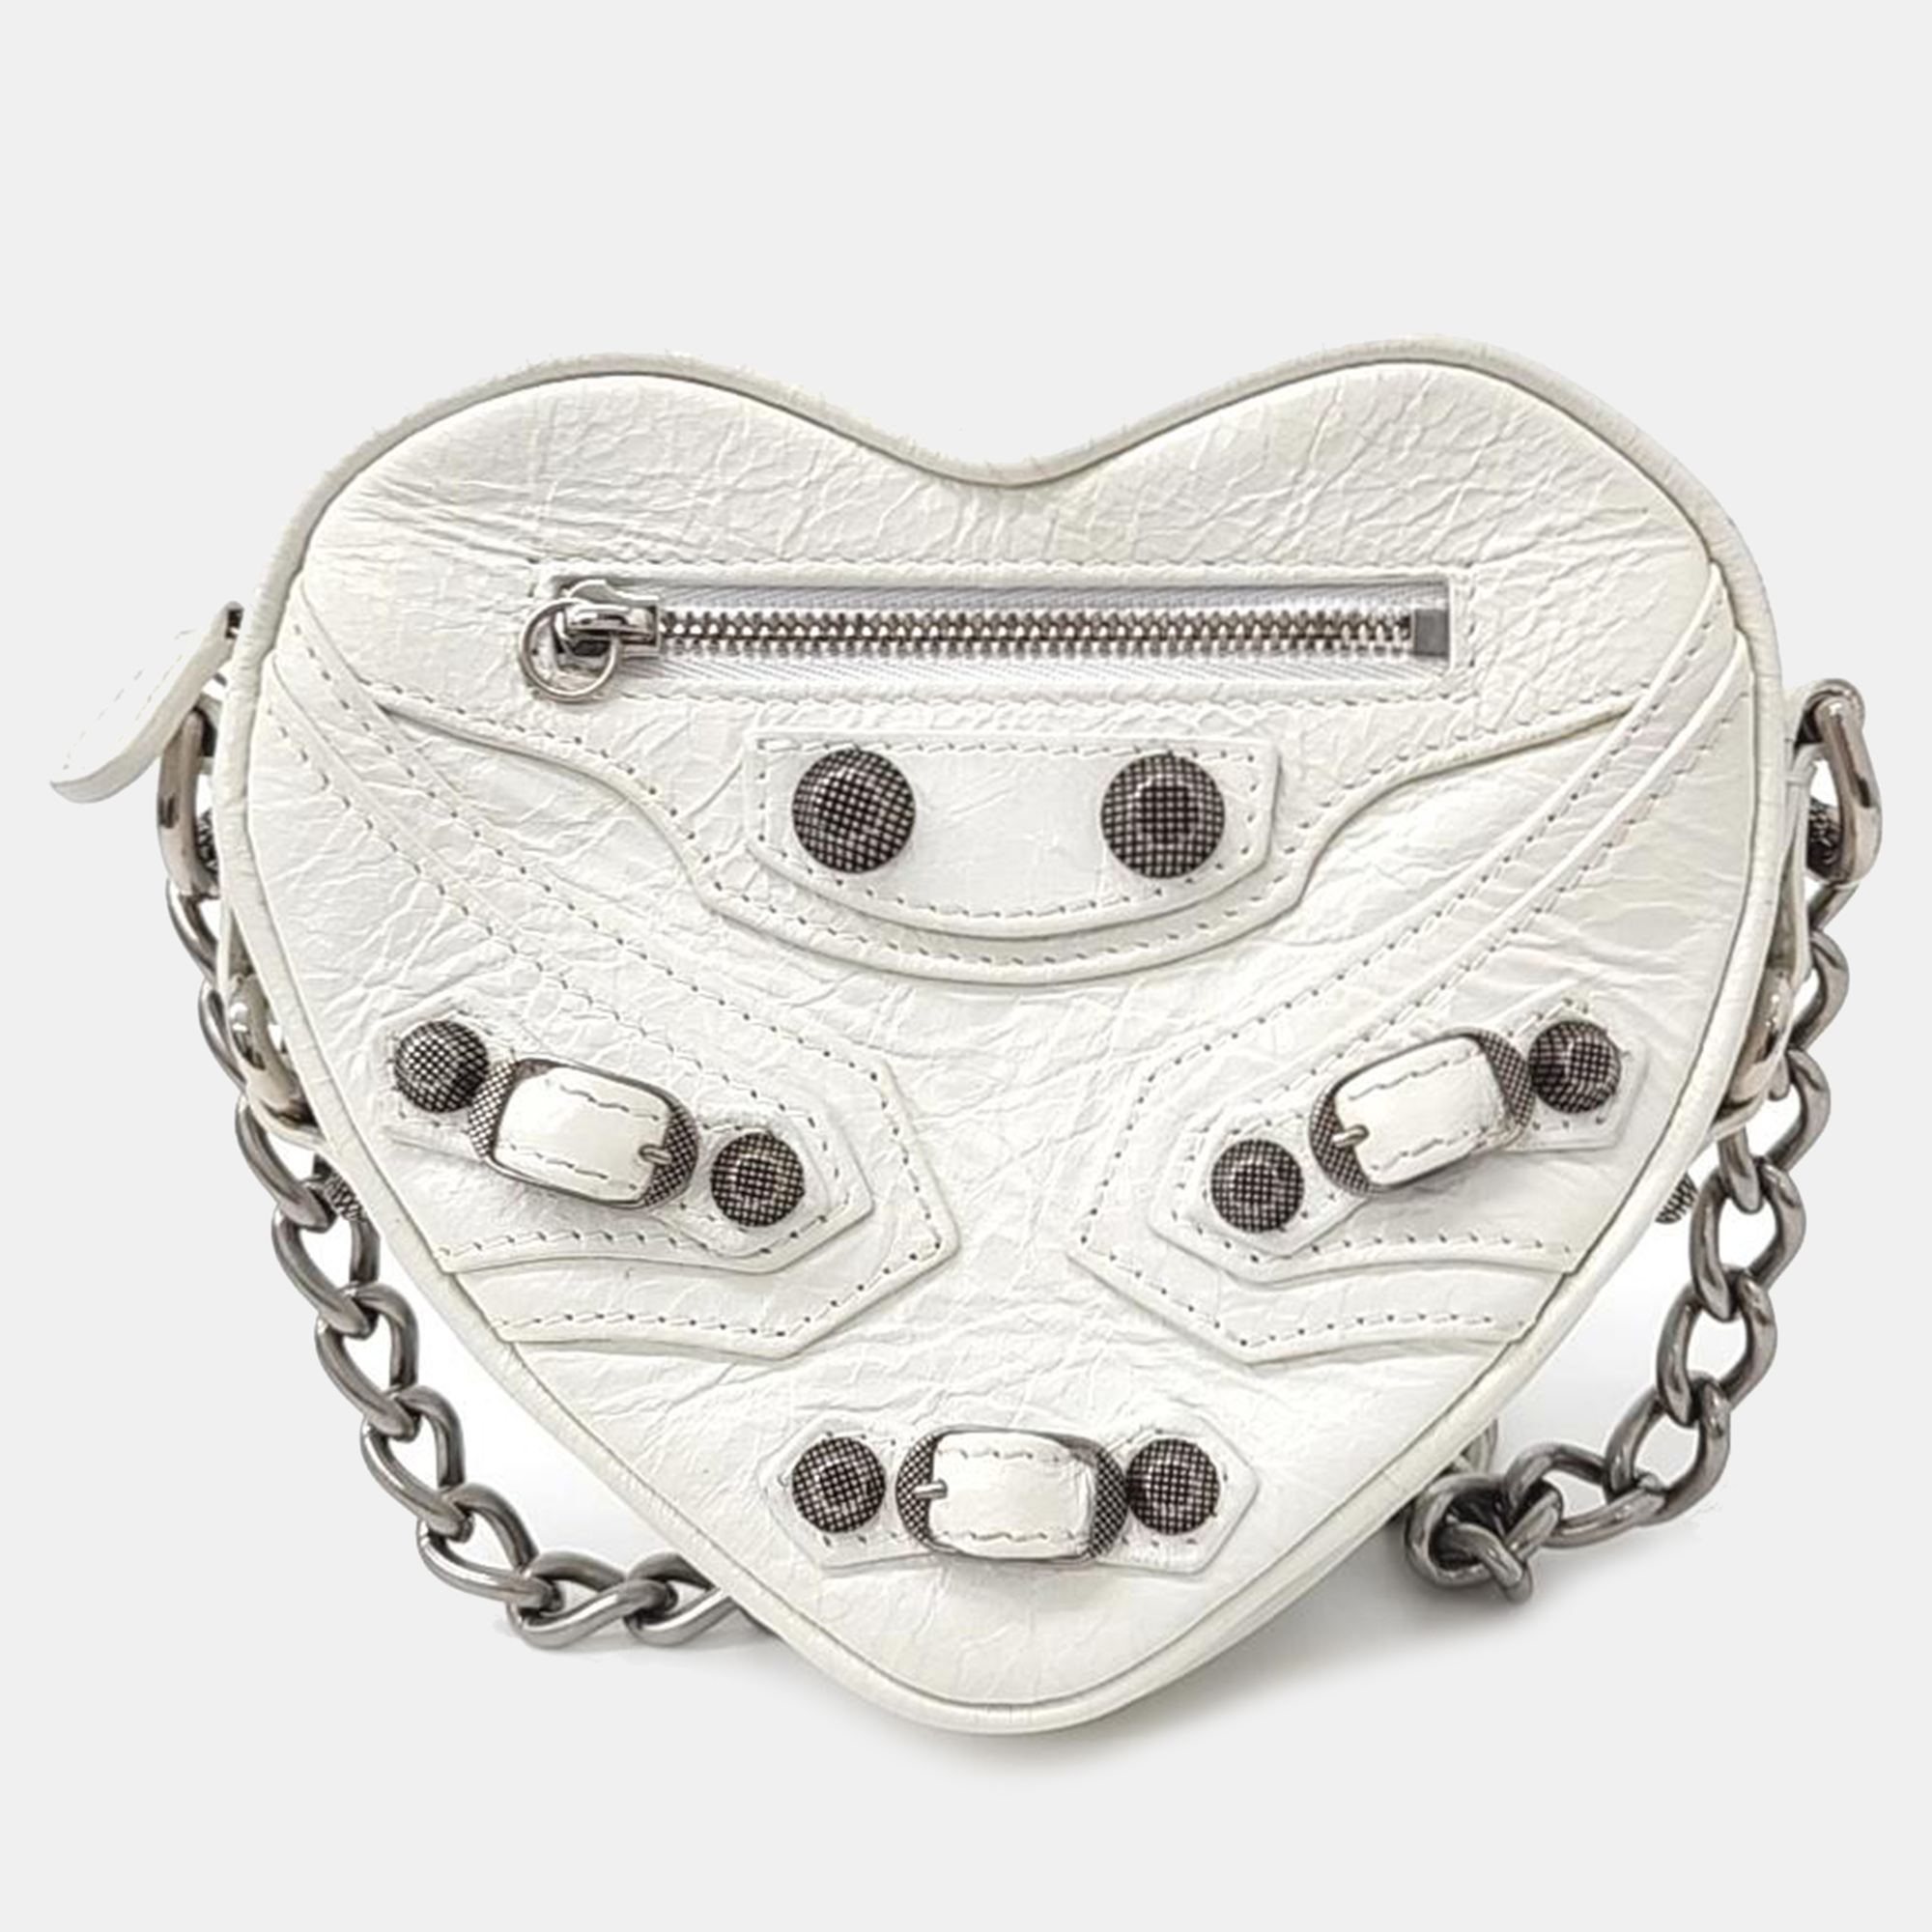 Balenciaga white leather heart chain shoulder bag